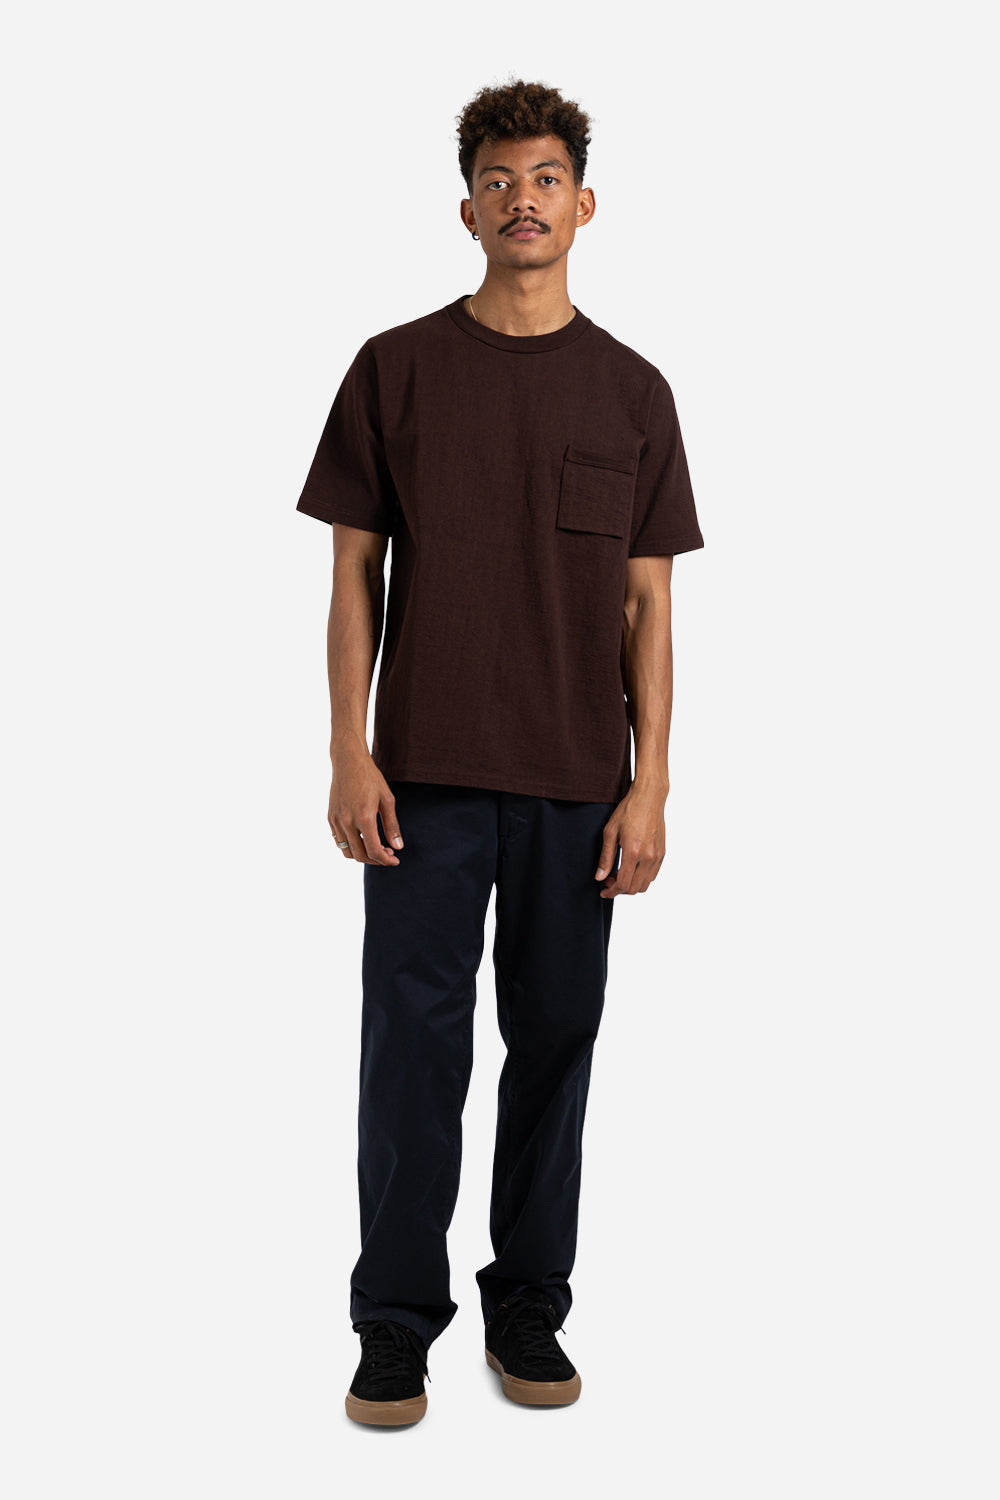 jackman-dotsume-pocket-t-shirt-black-brown